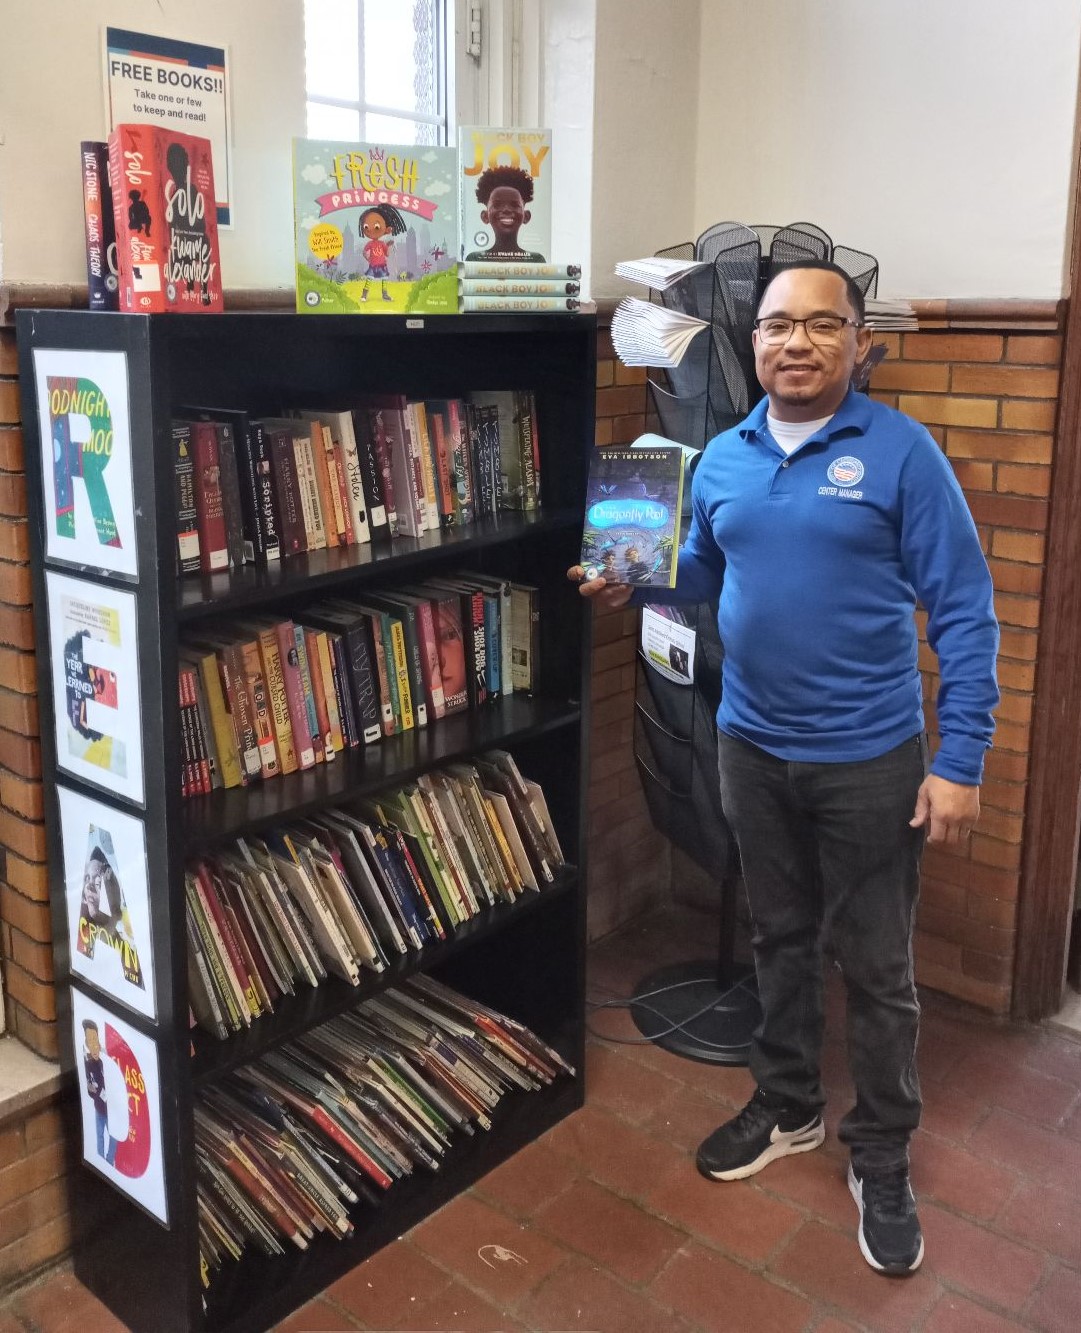 man in blue shirt standing next to a bookshelf full of books